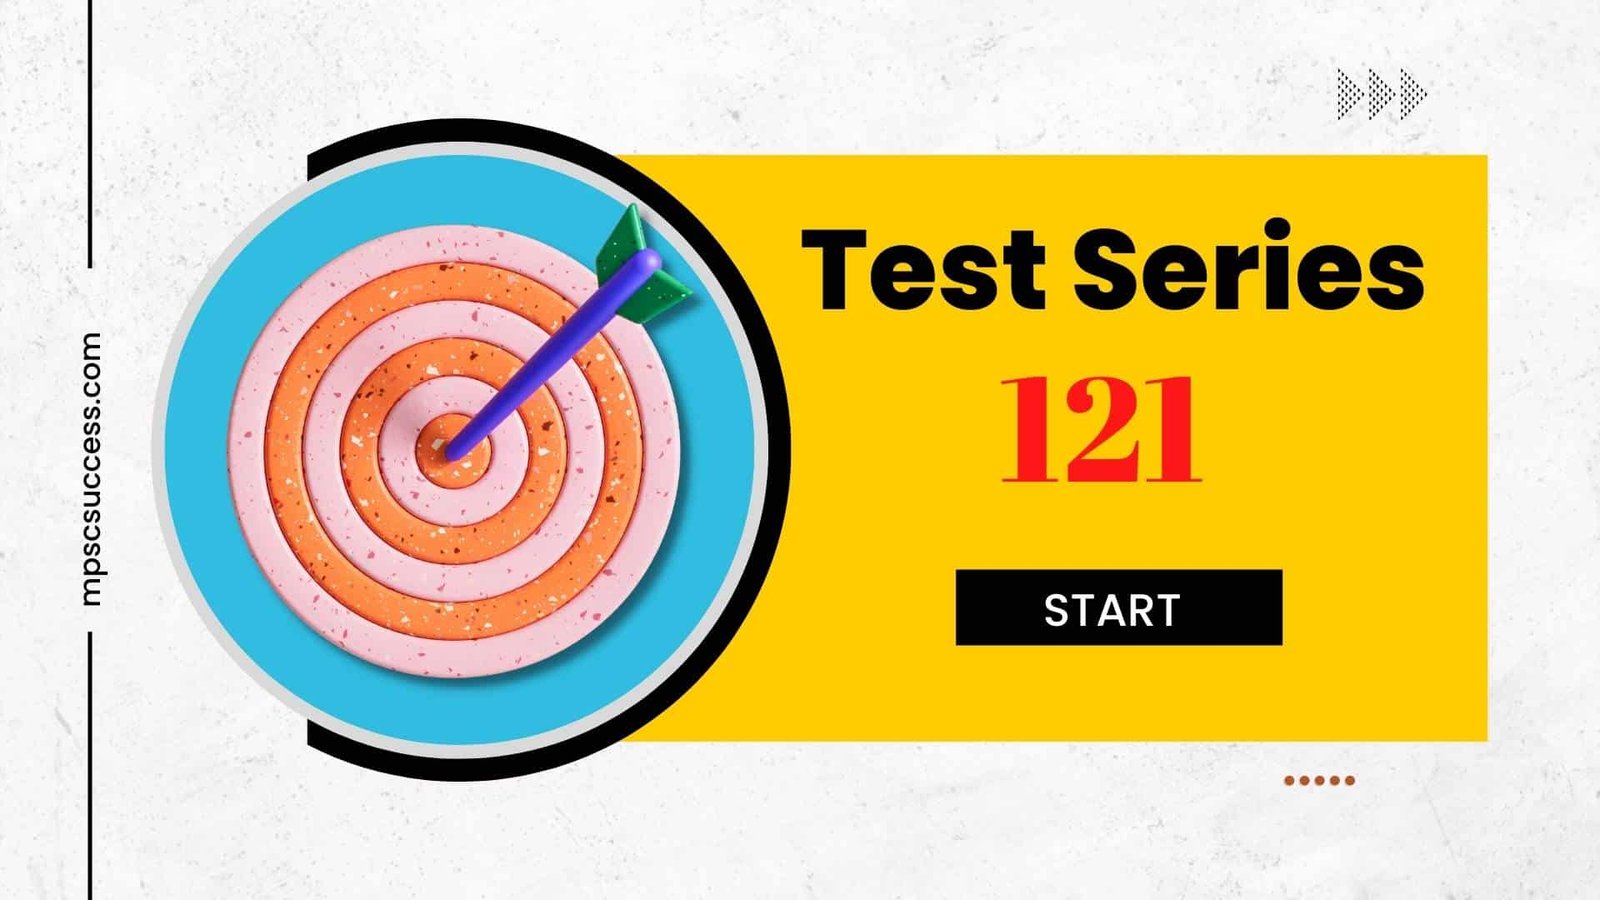 Test Series 121